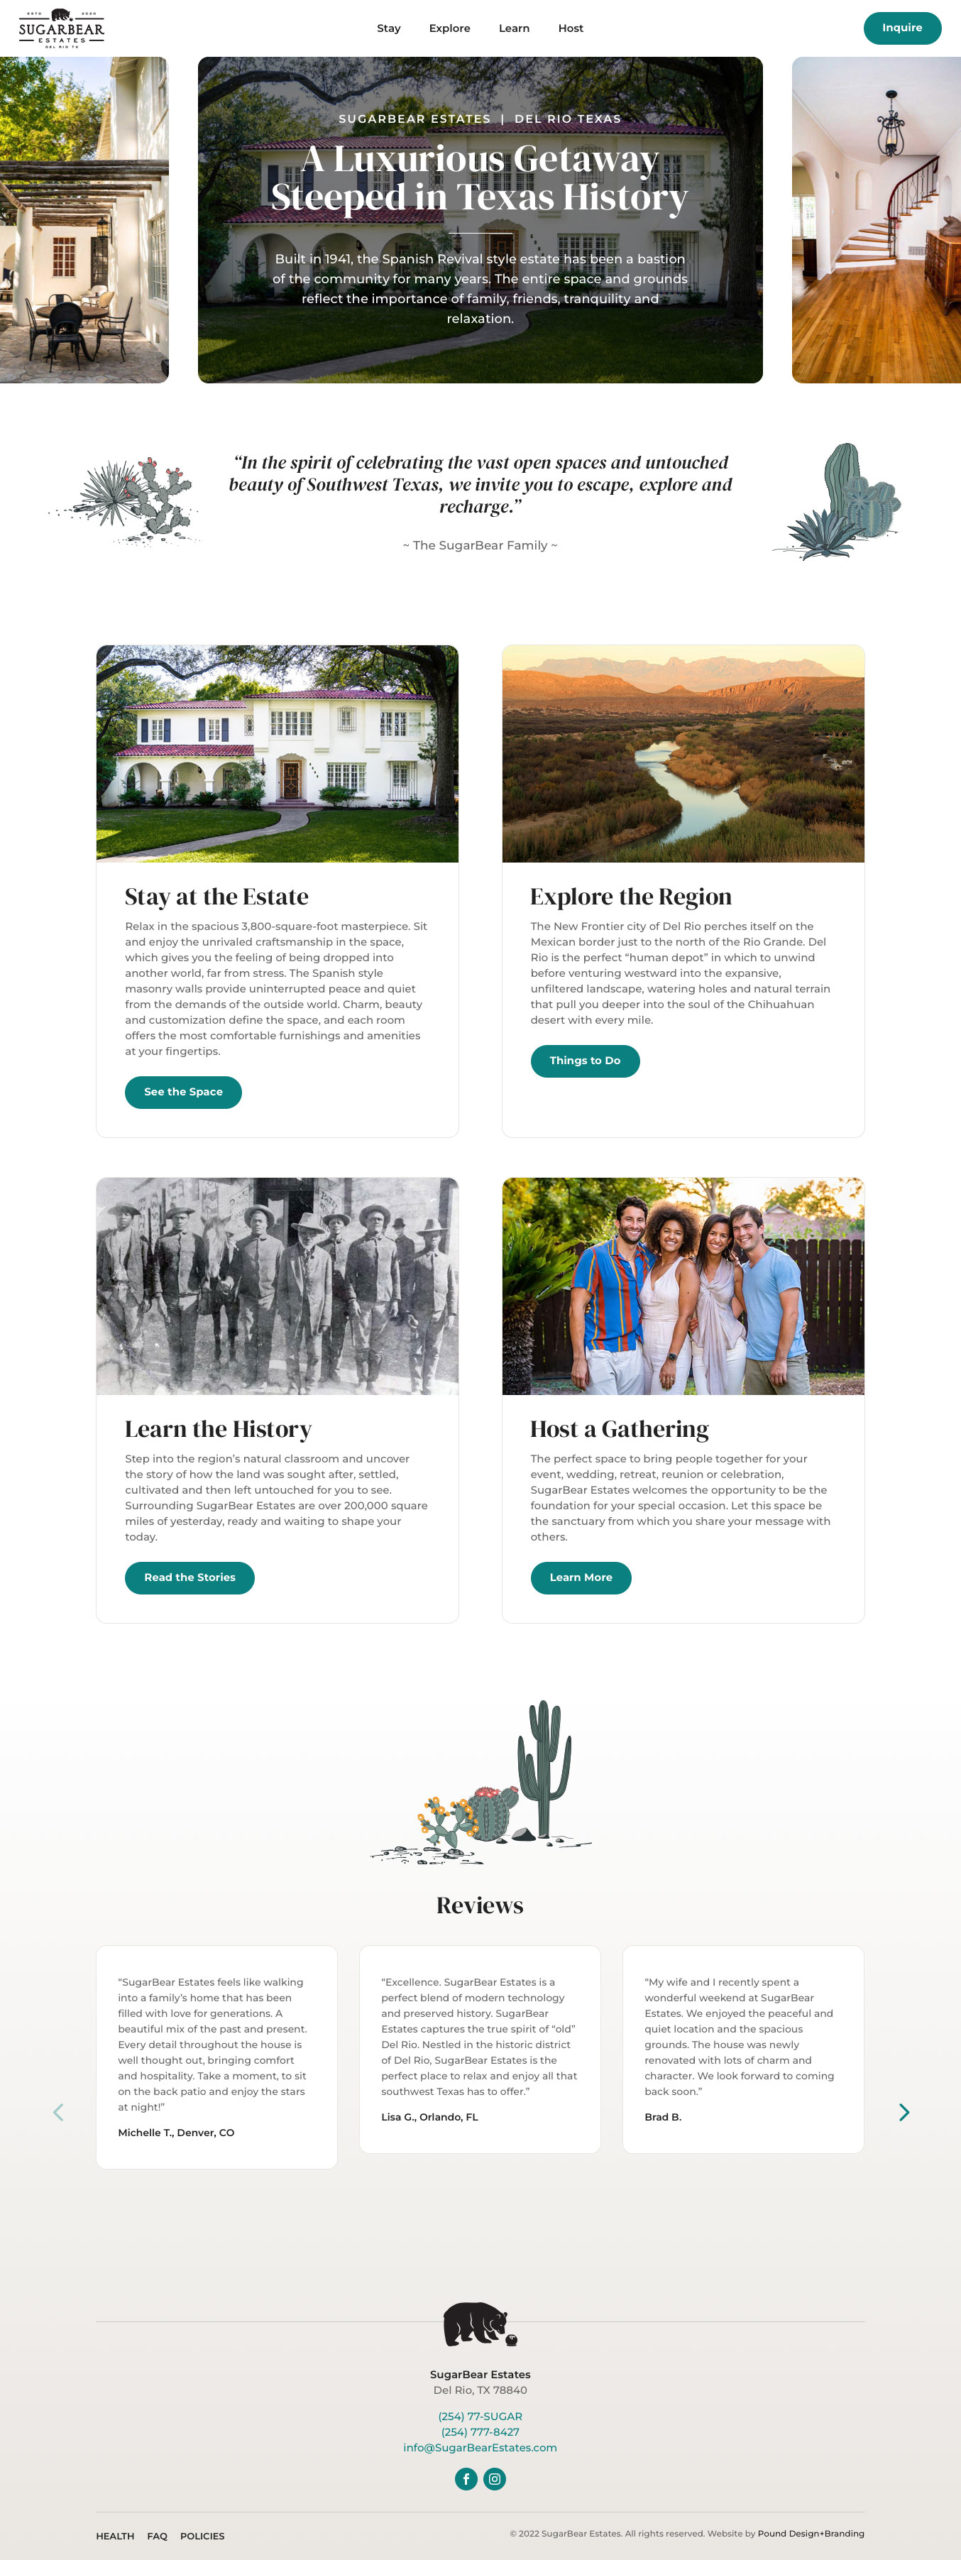 SugarBear Estates homepage website design and development by Pound Design in Austin Texas